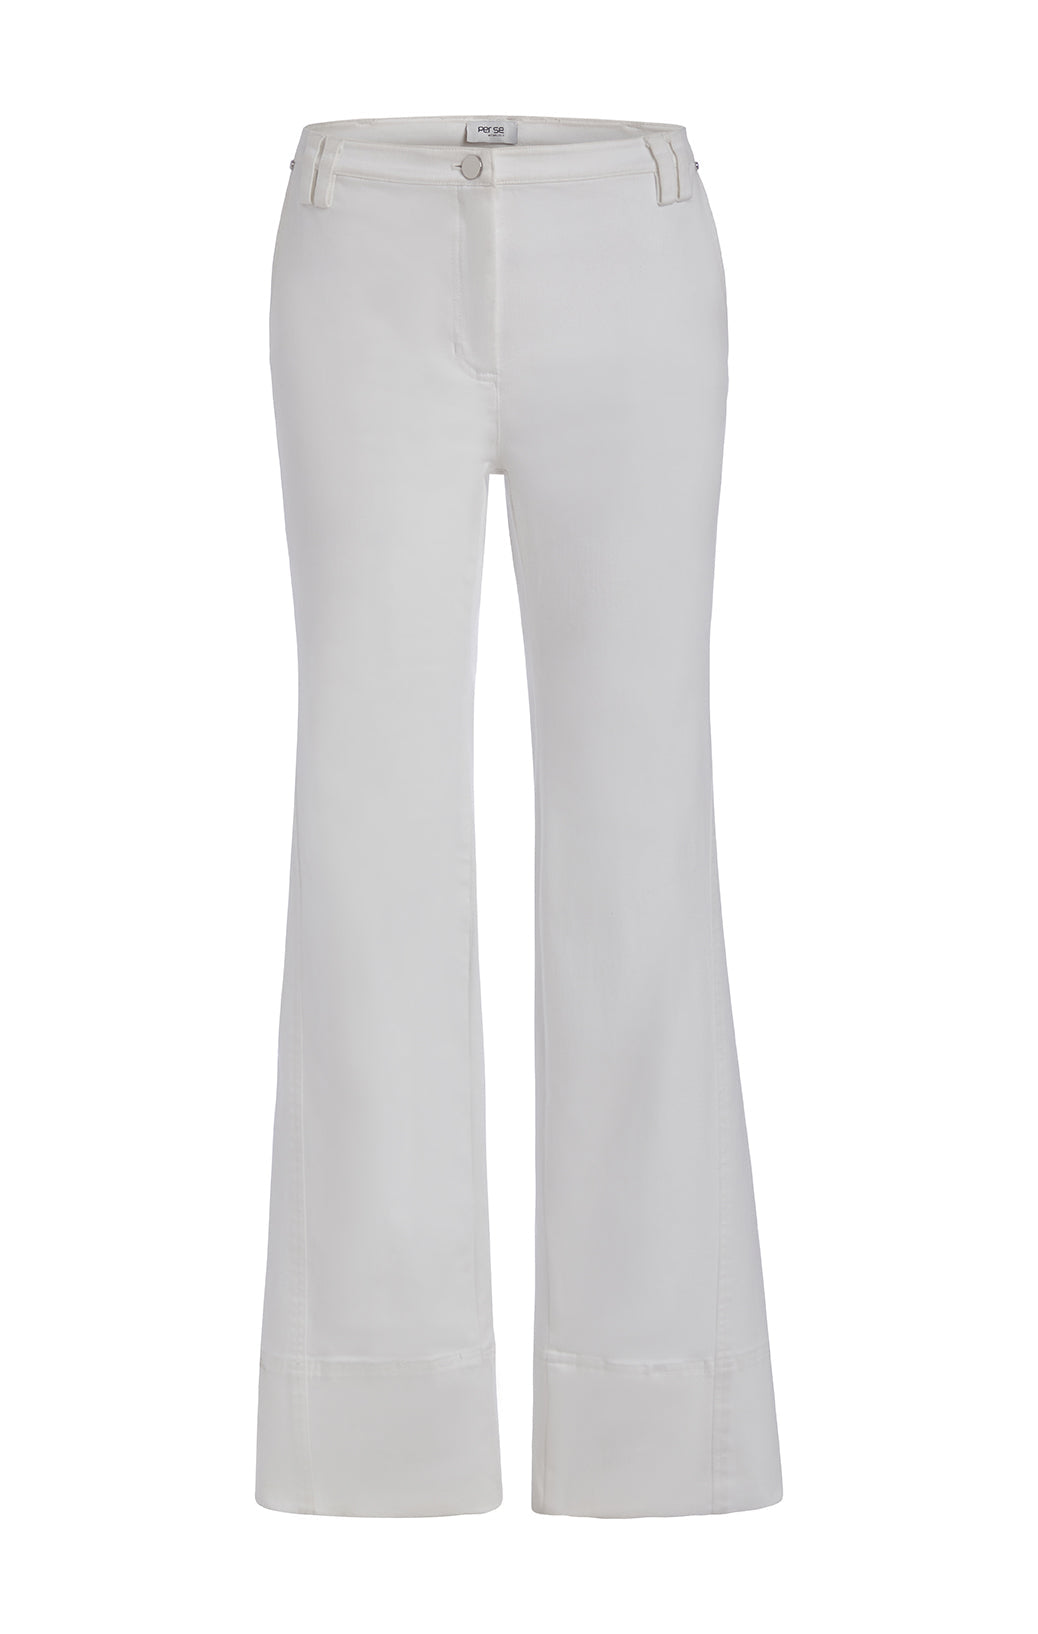 Finesse-Wht - Flap-Pocket, Double-Weave Pants - Product Image